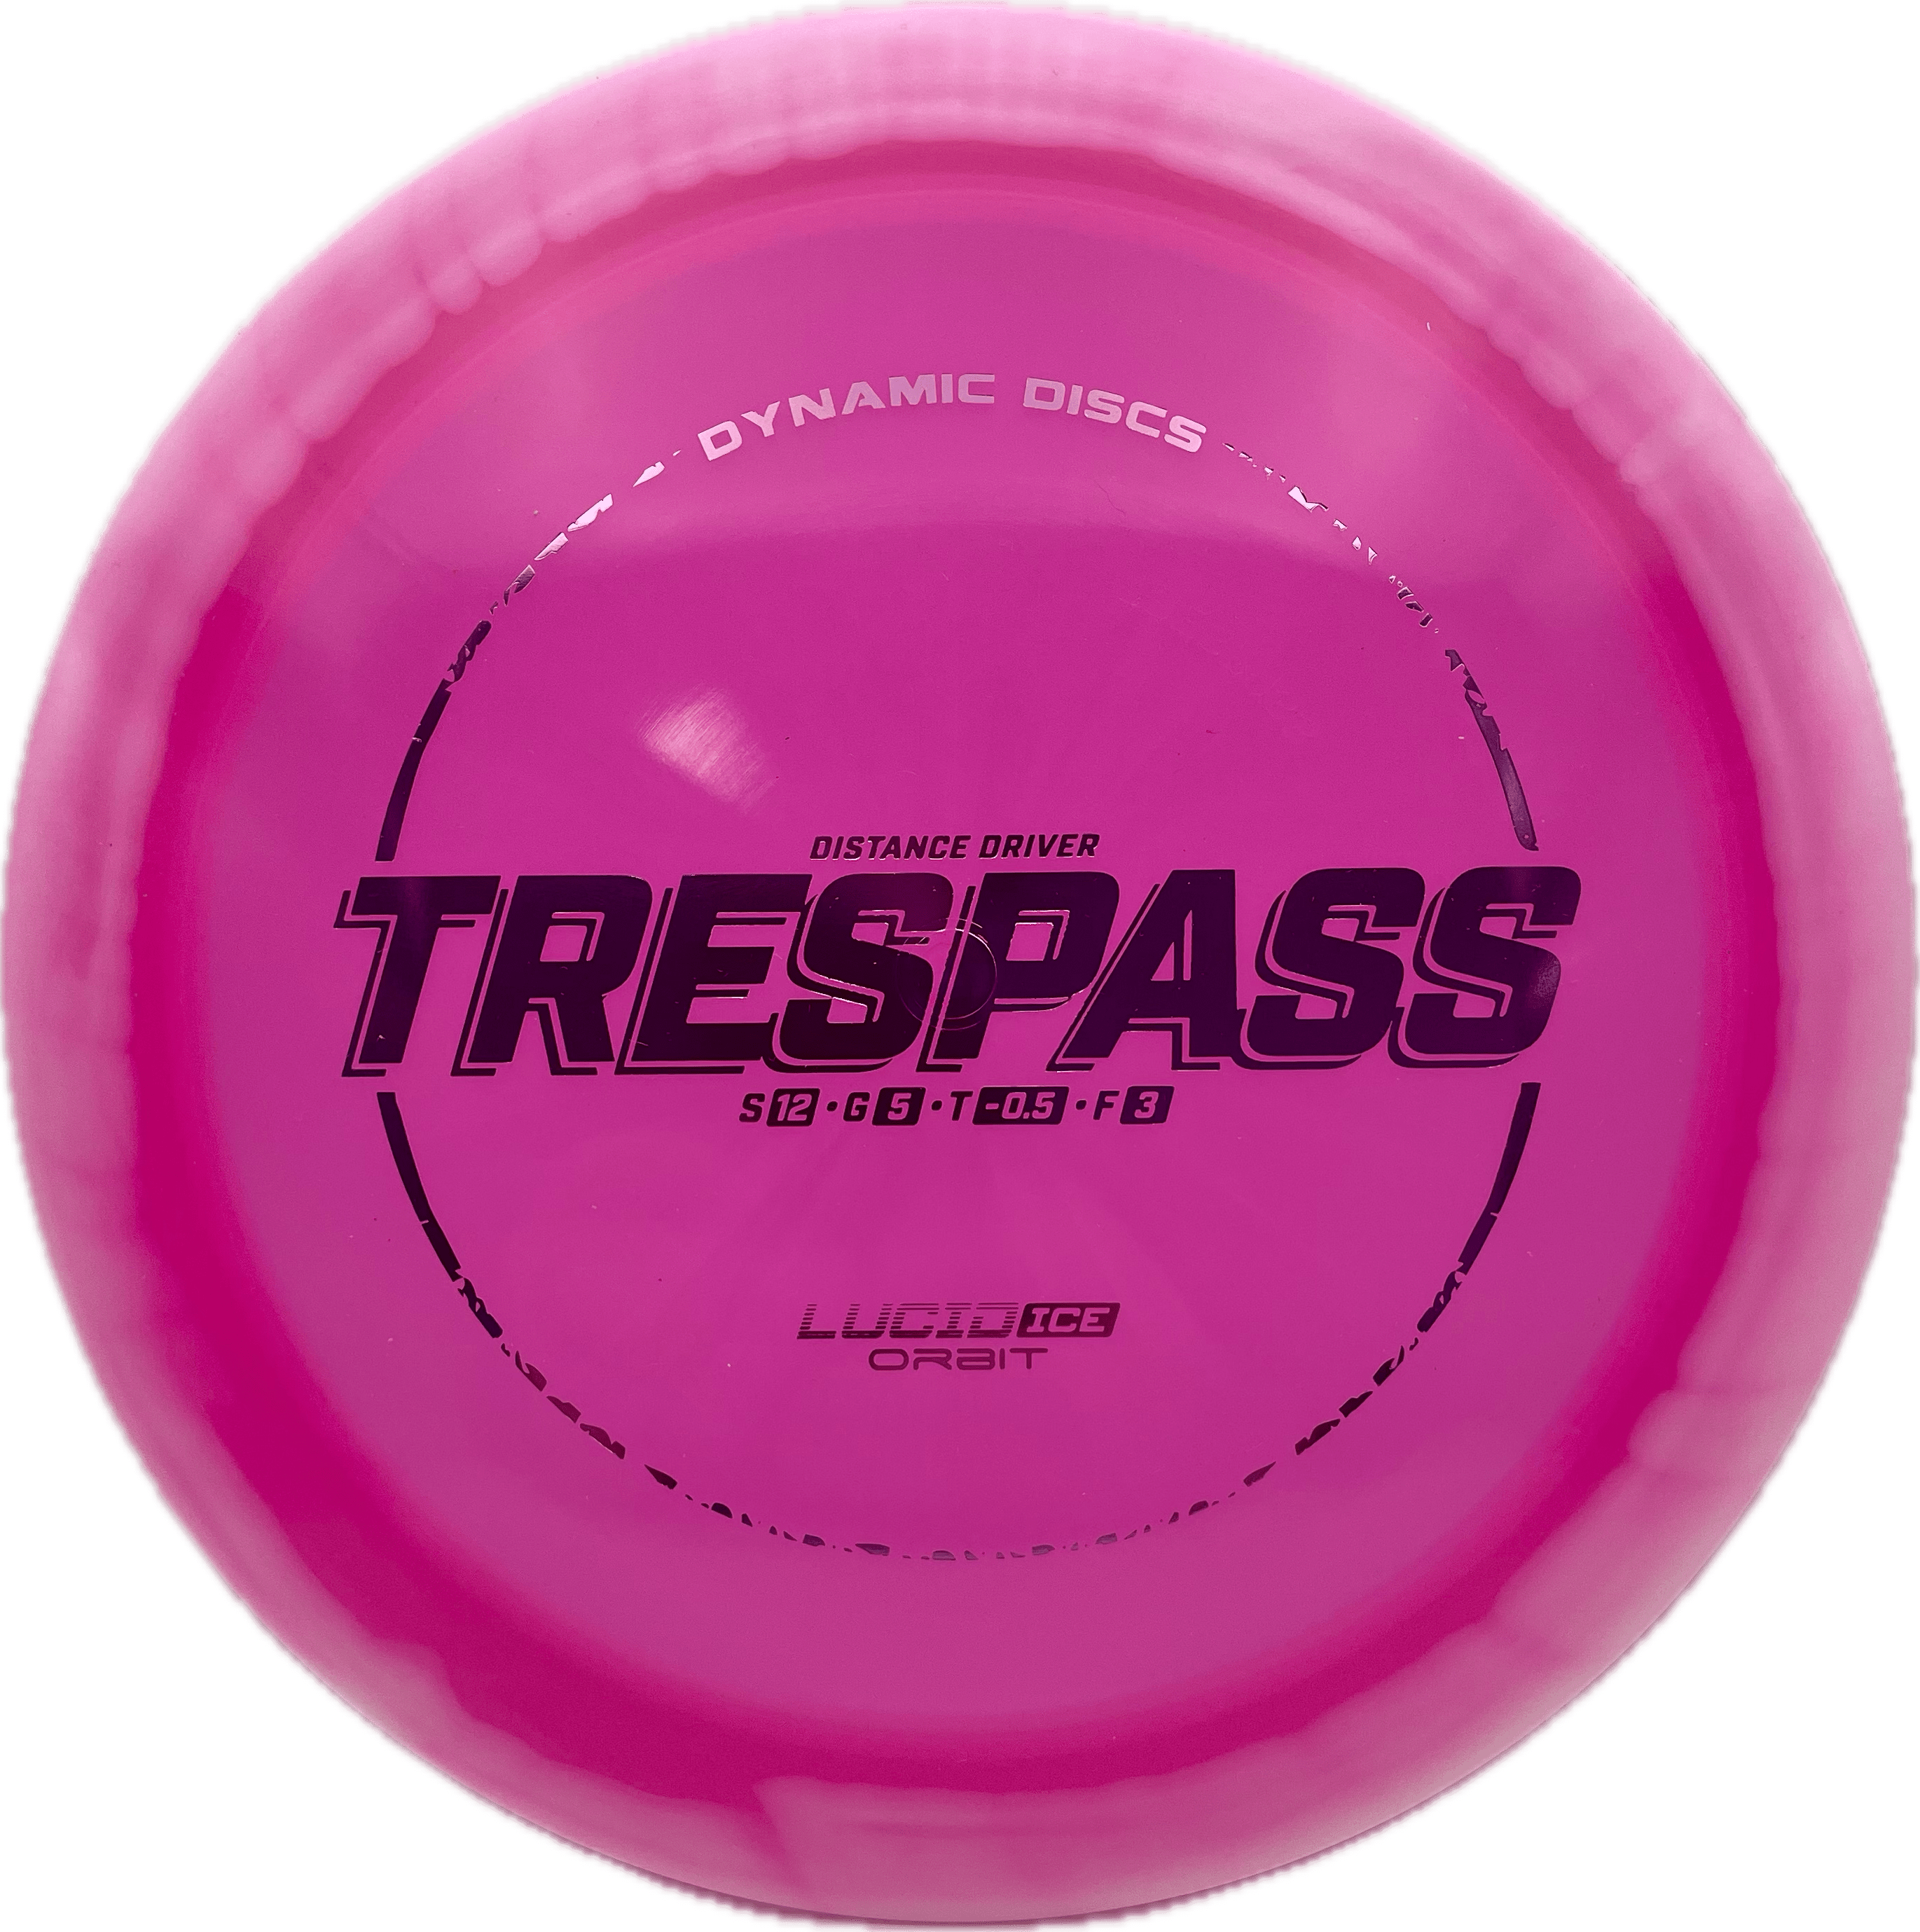 Latitude 64 Disc Dynamic Discs Trespass, Lucid Ice Orbit, 173-175, Pink, Silver Metallic